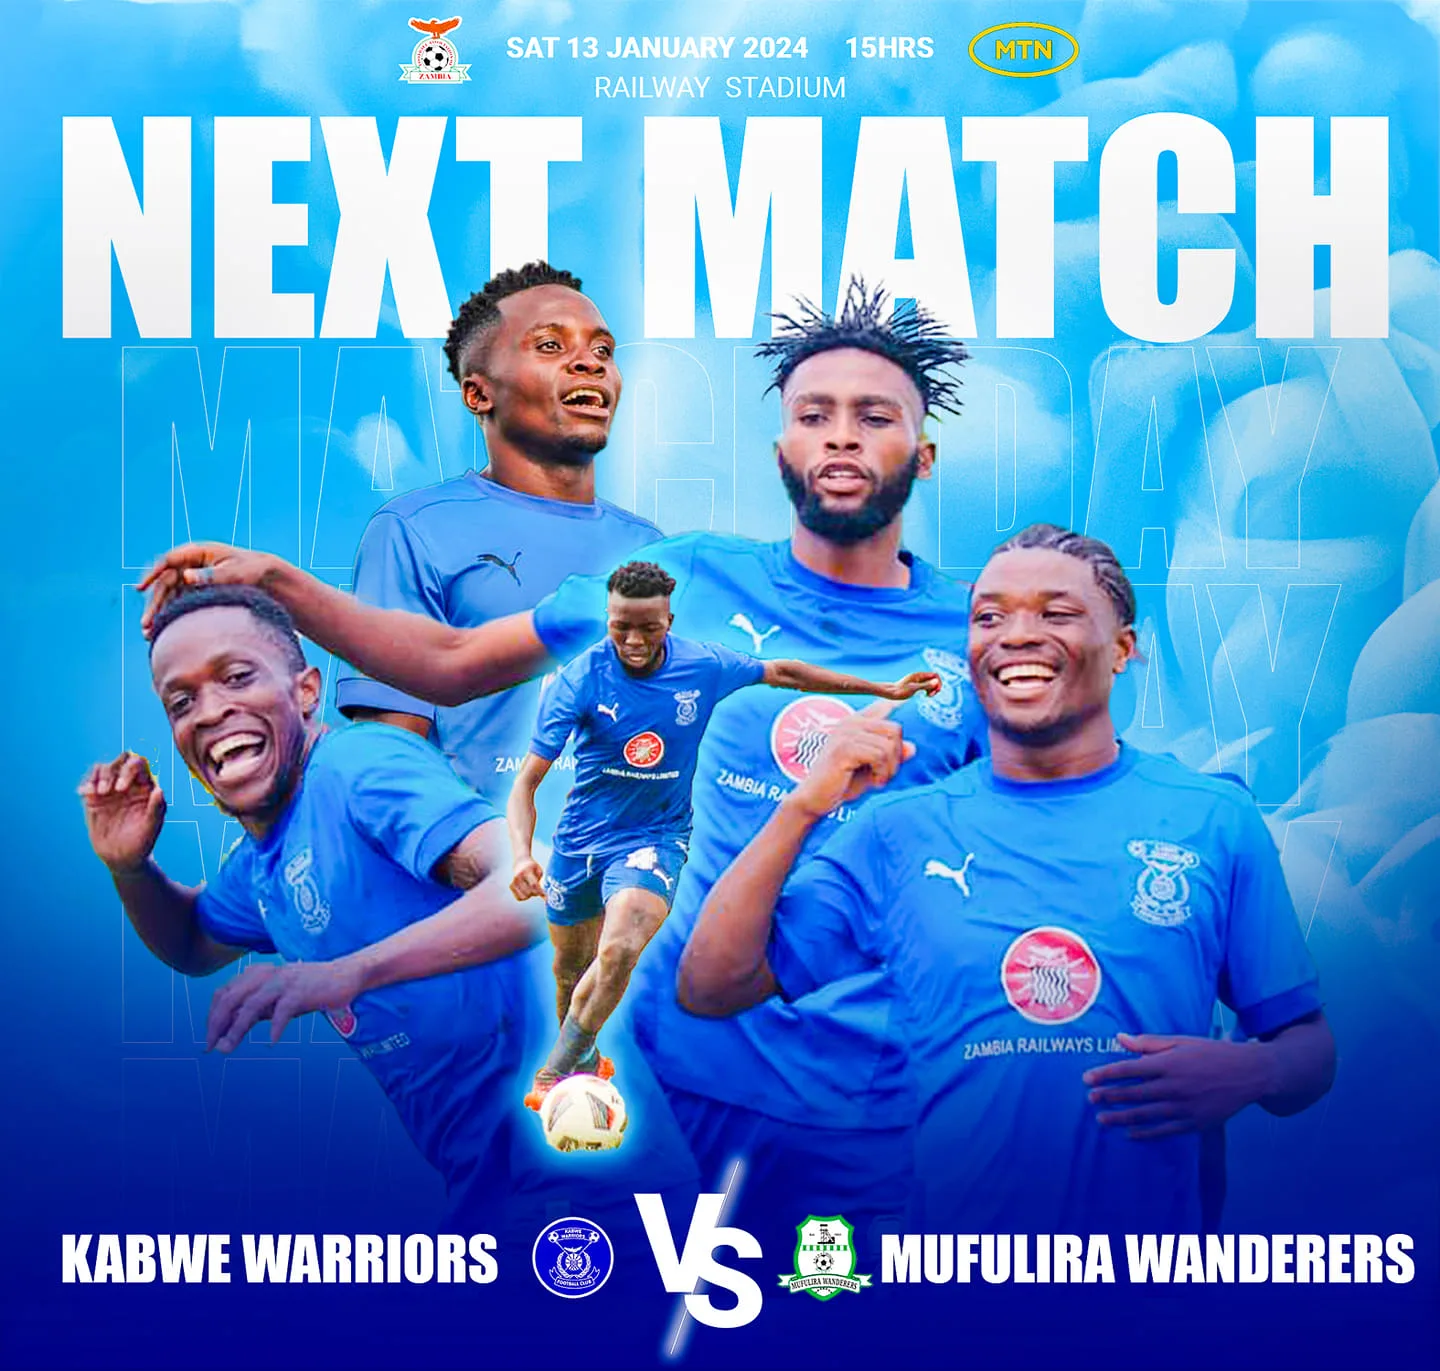 Kabwe Warriors vs Mufulira Wanderers: A Battle of Determination